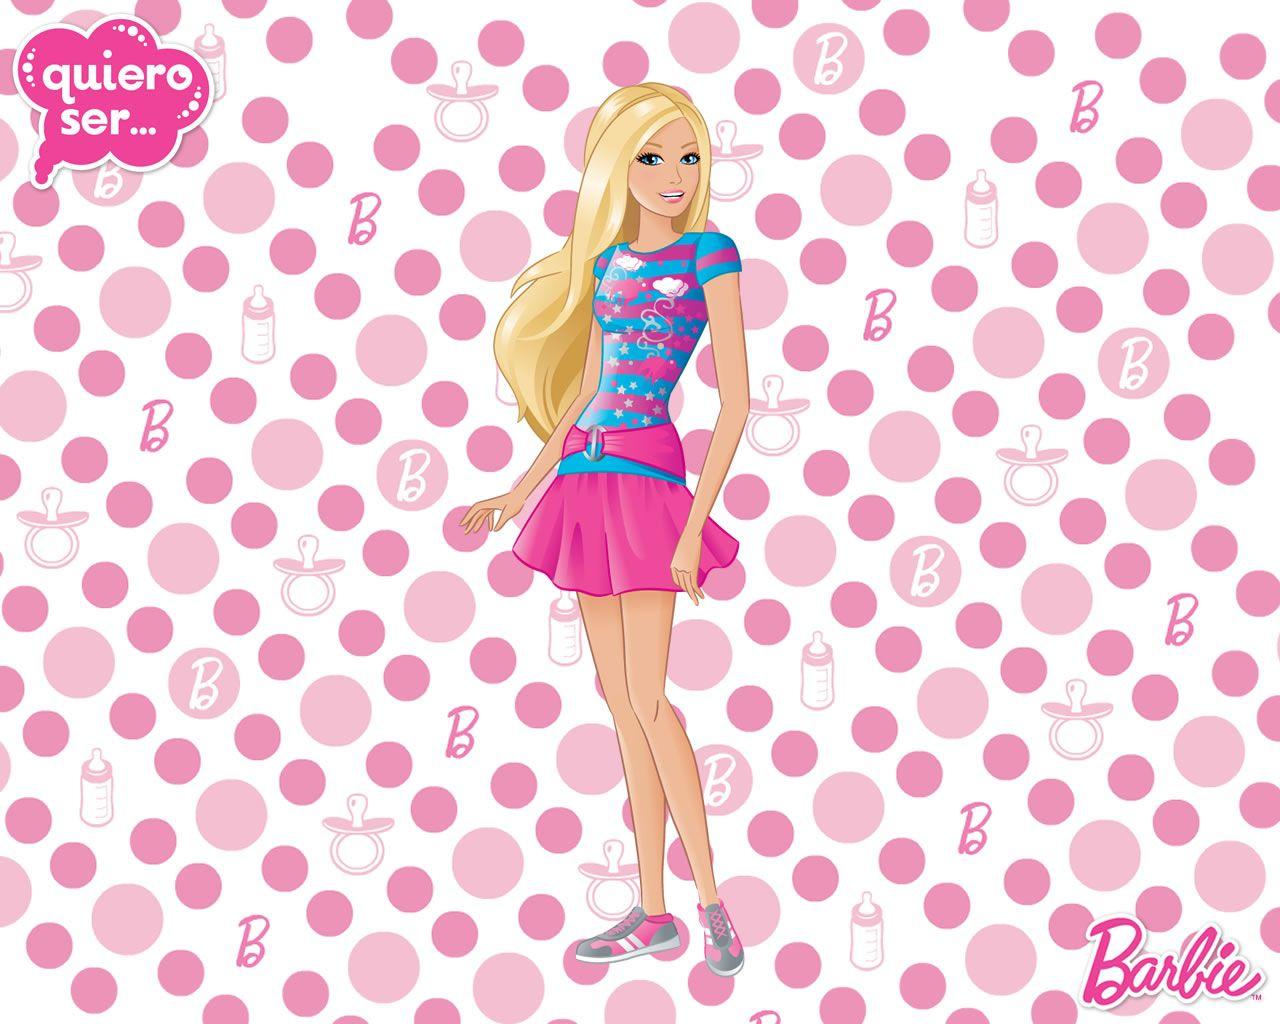 Barbie Wallpaper 15. Wallpapernesia